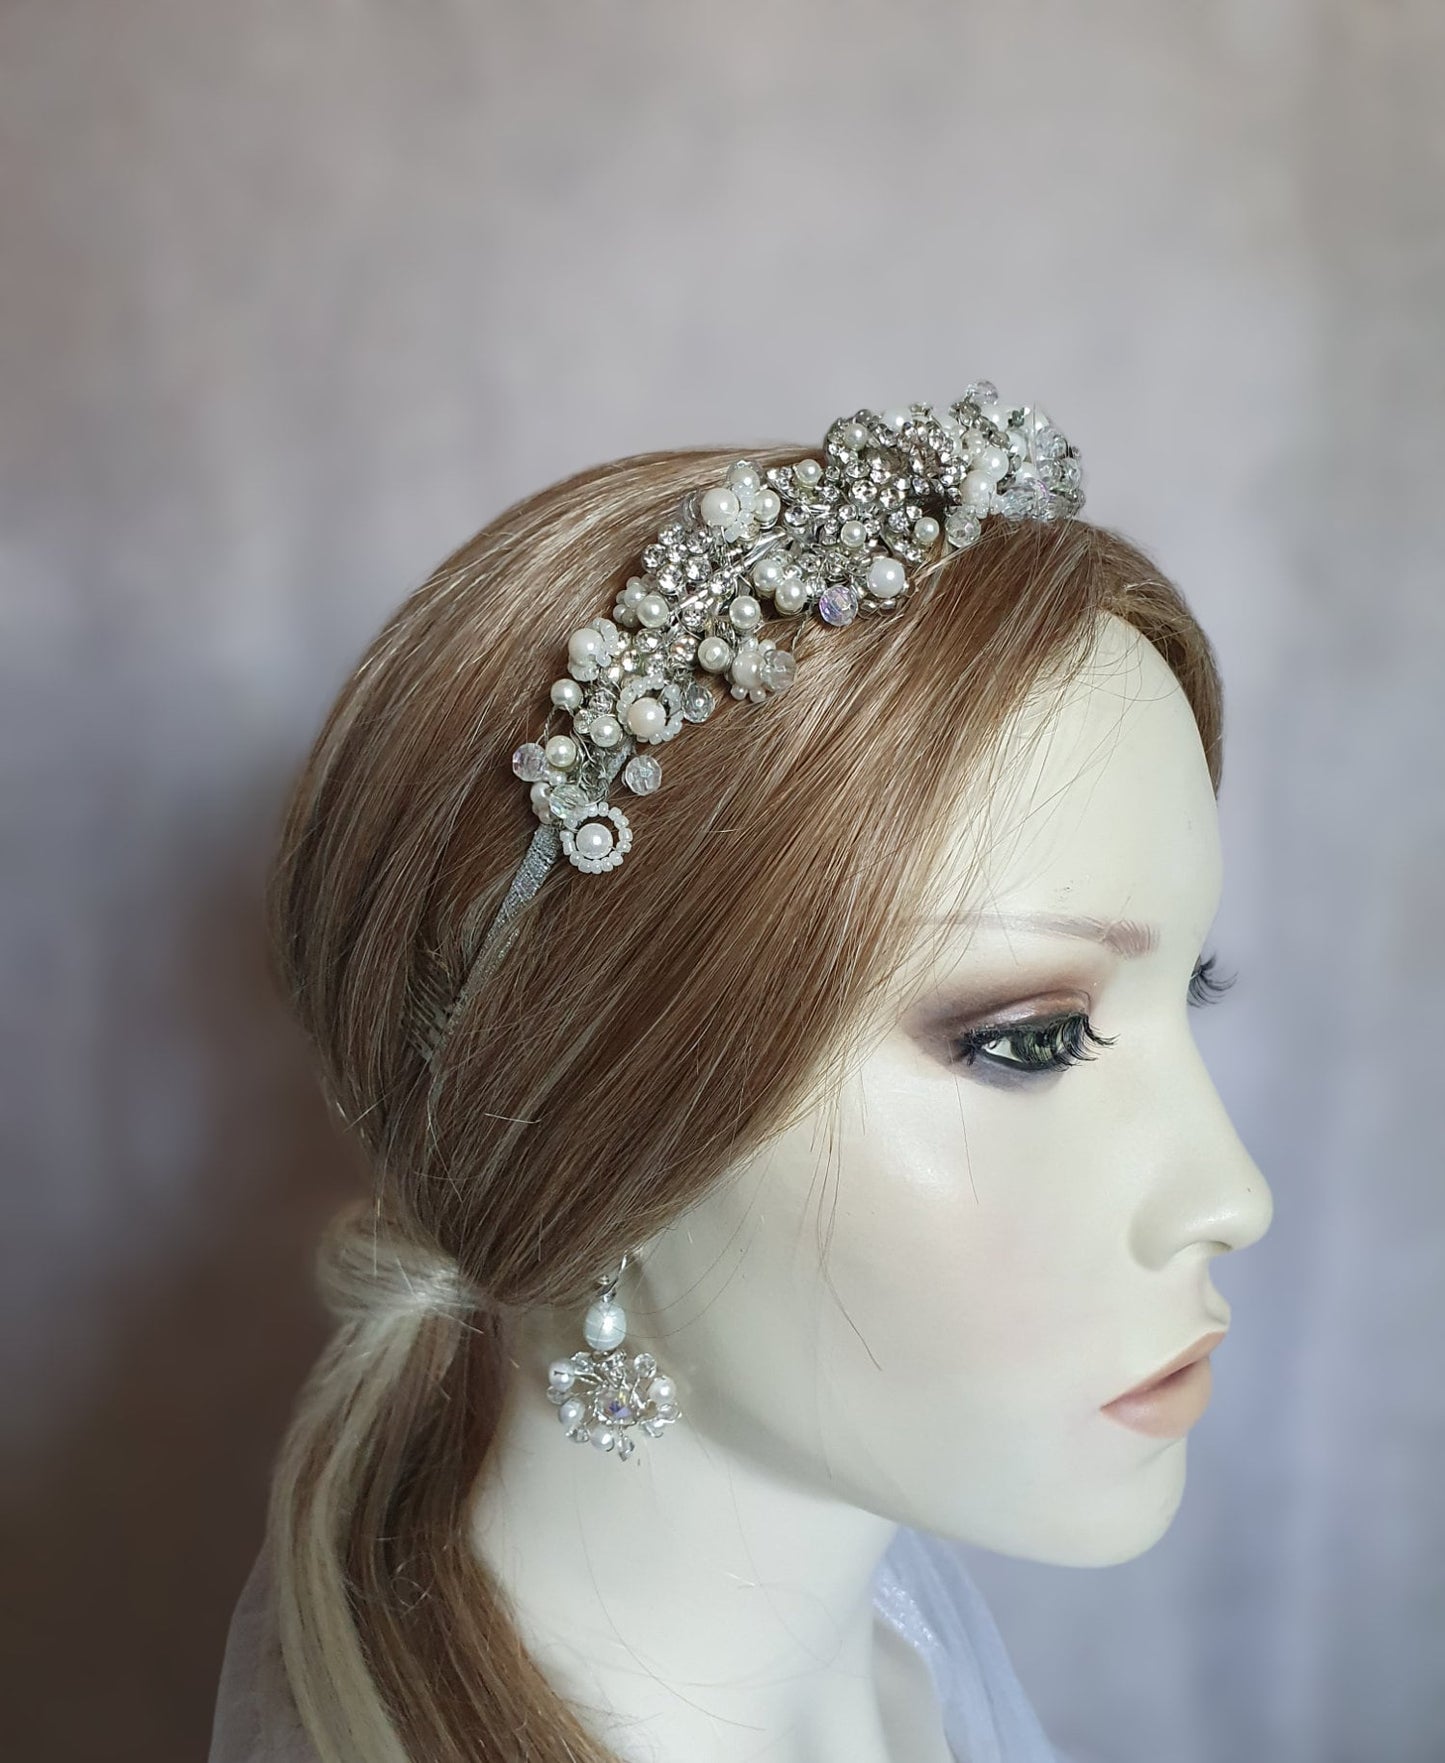 Bruiloft tiara met kristallen stenen en parels, handgemaakt, bruids tiara, bruids diaeem, bruids tiara, dames tiara, speciale gelegenheid